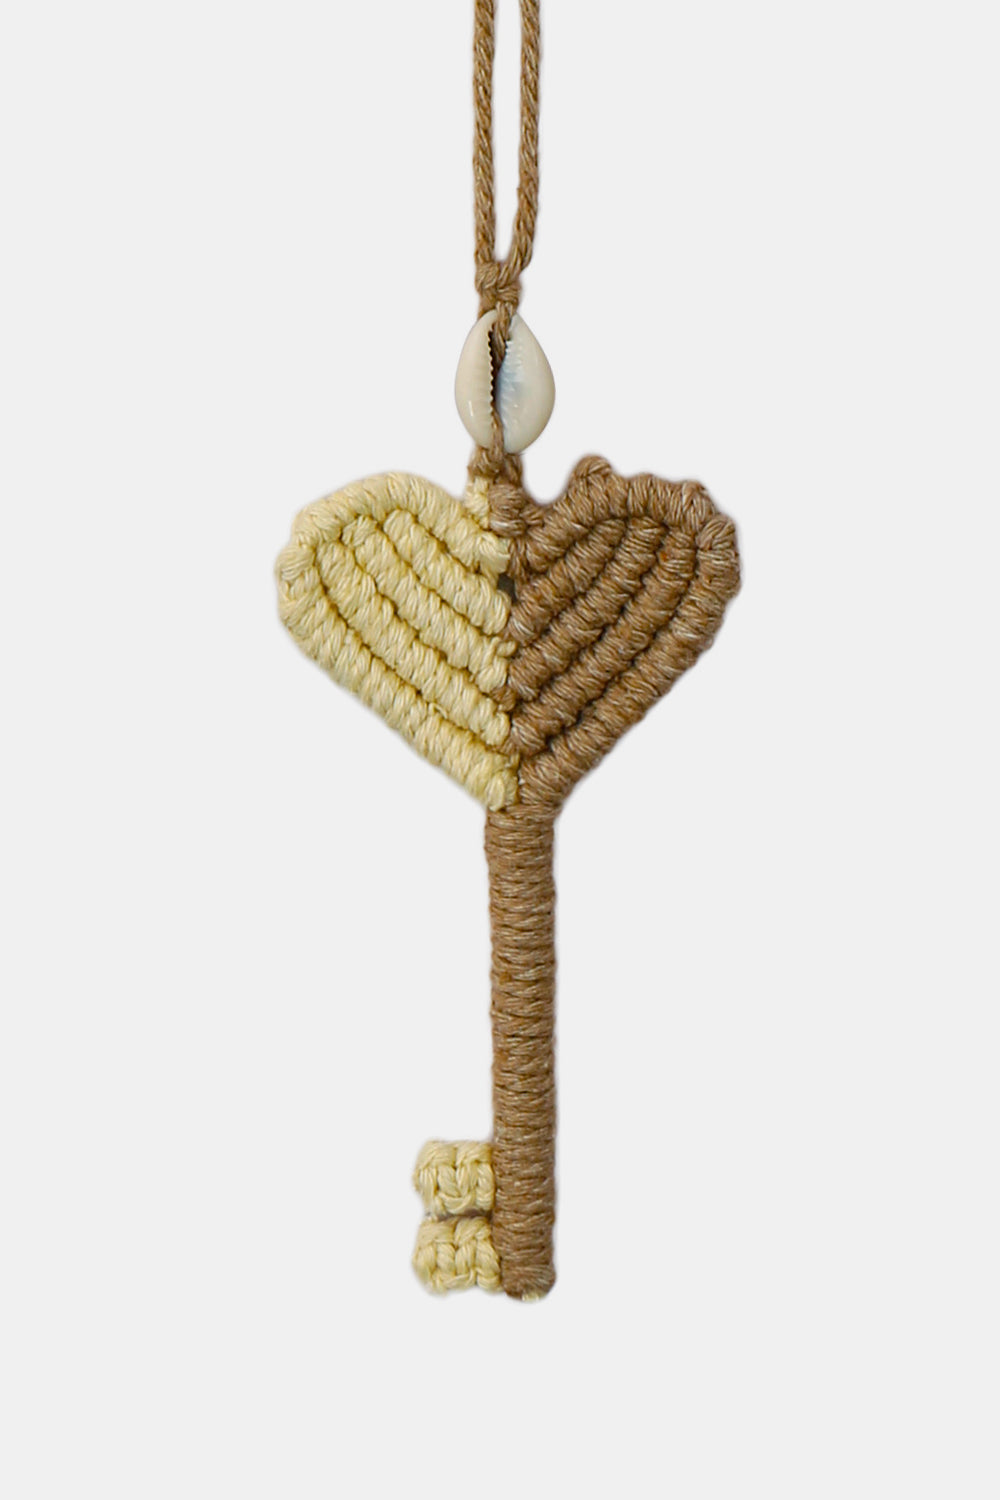 Trendsi Cupid Beauty Supplies Khaki / One Size Keychains Cotton Cord Key Shape Pendant Necklace